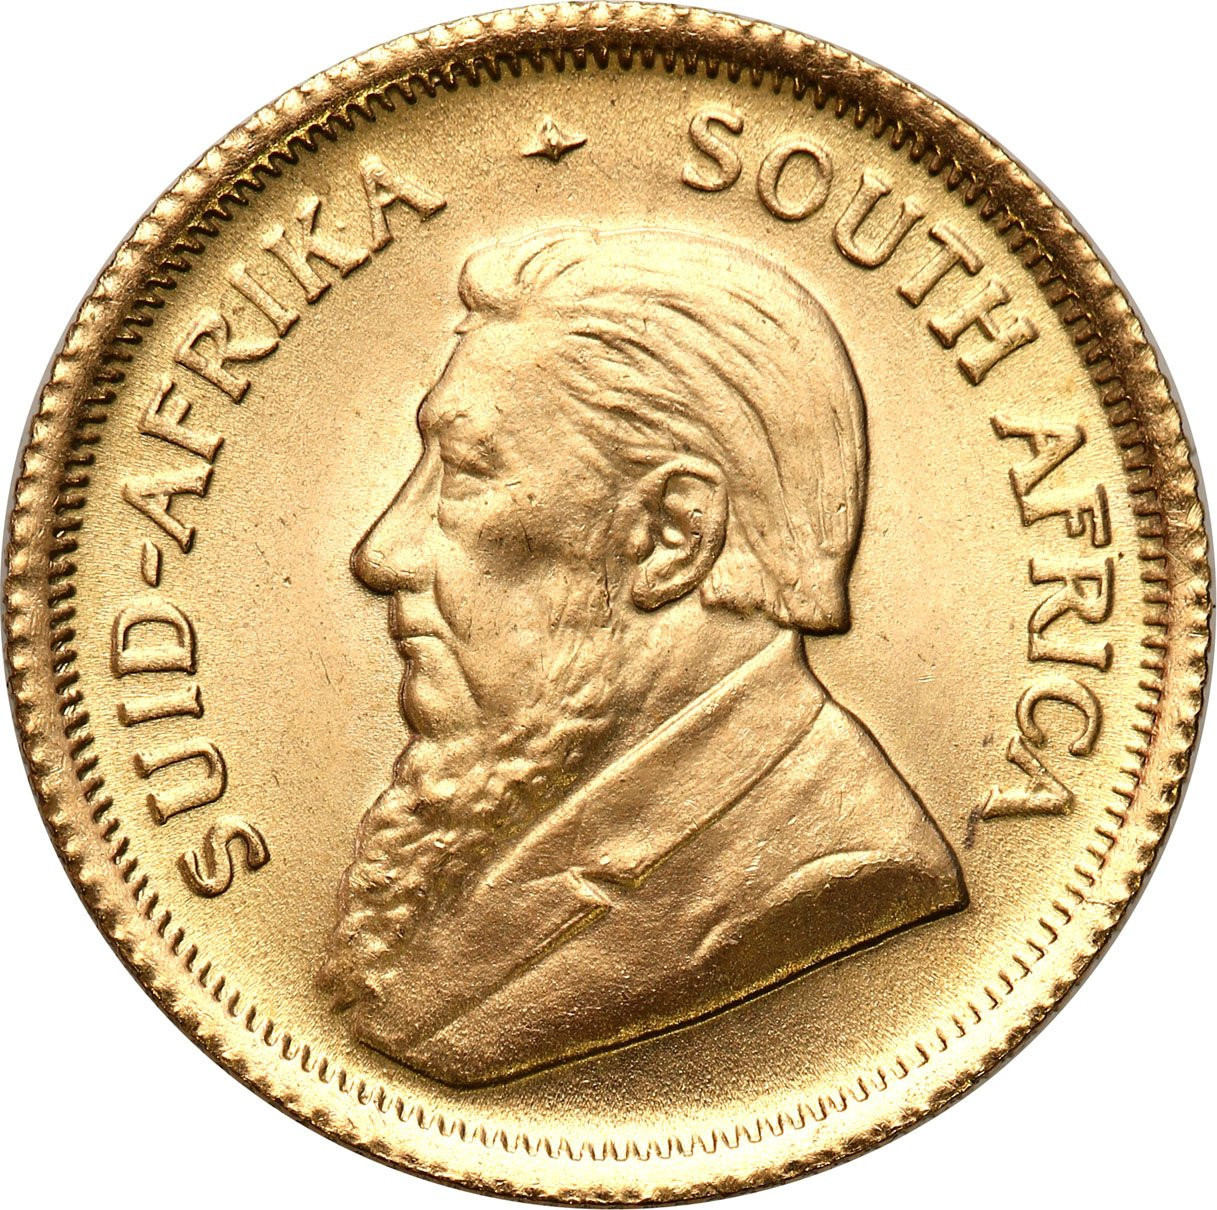 RPA 1/10 Krugerranda 1982 - 1/10 uncji złota